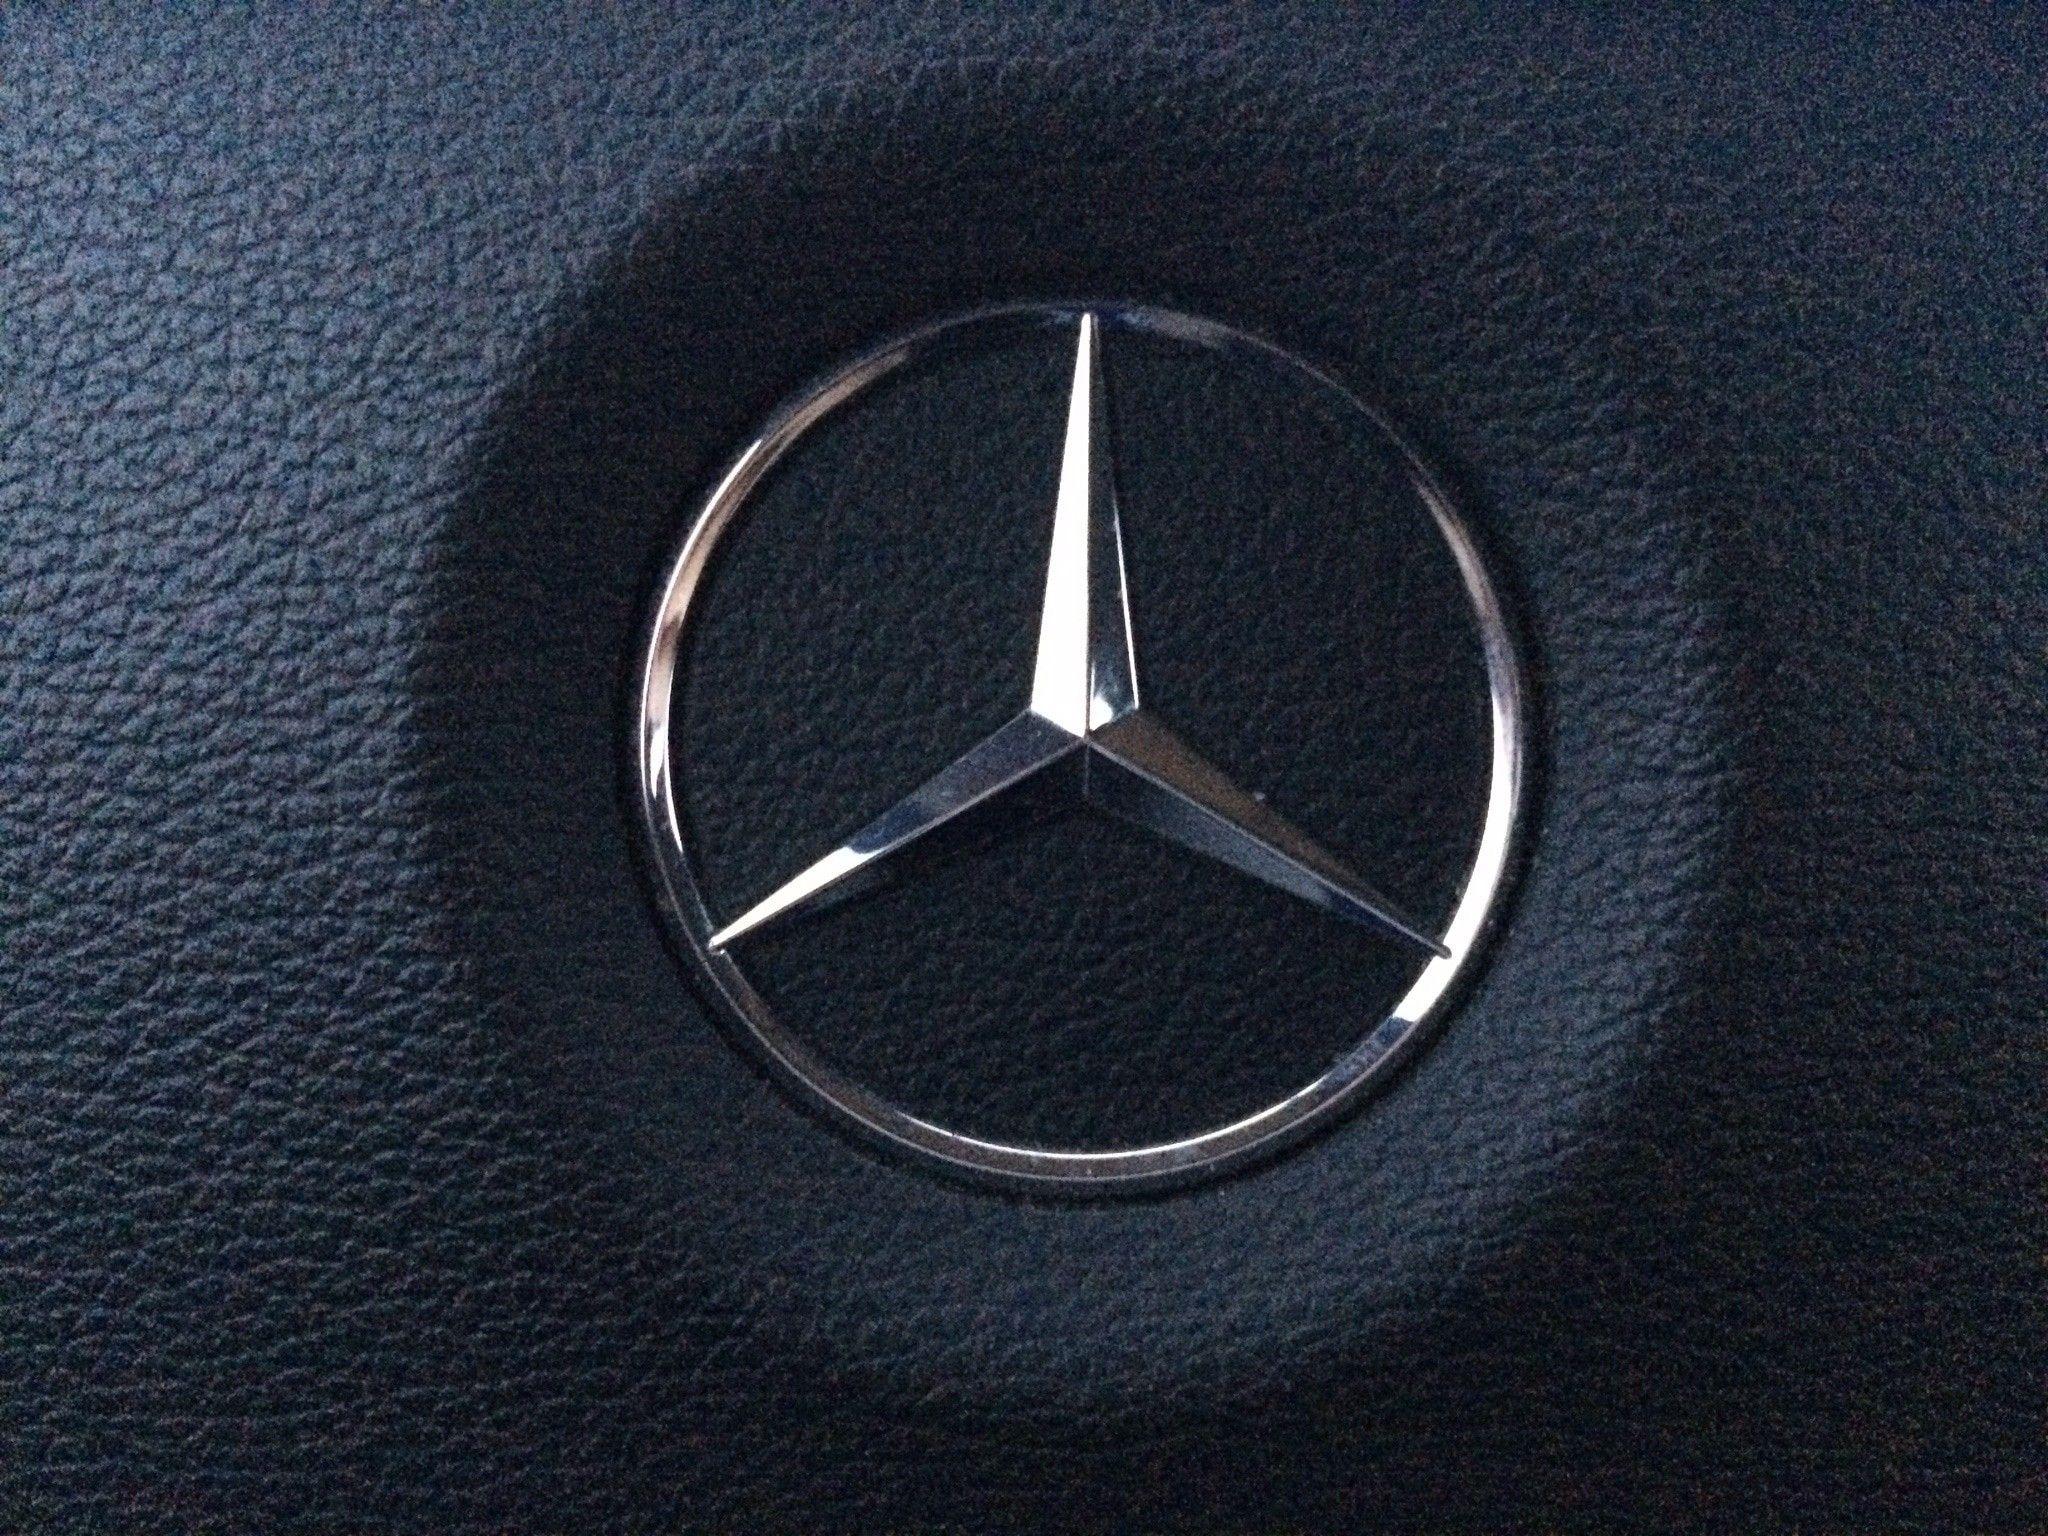 Mercedes-Benz logo 3 wallpaper by Meisan91 - Download on ZEDGE™ | 4f19